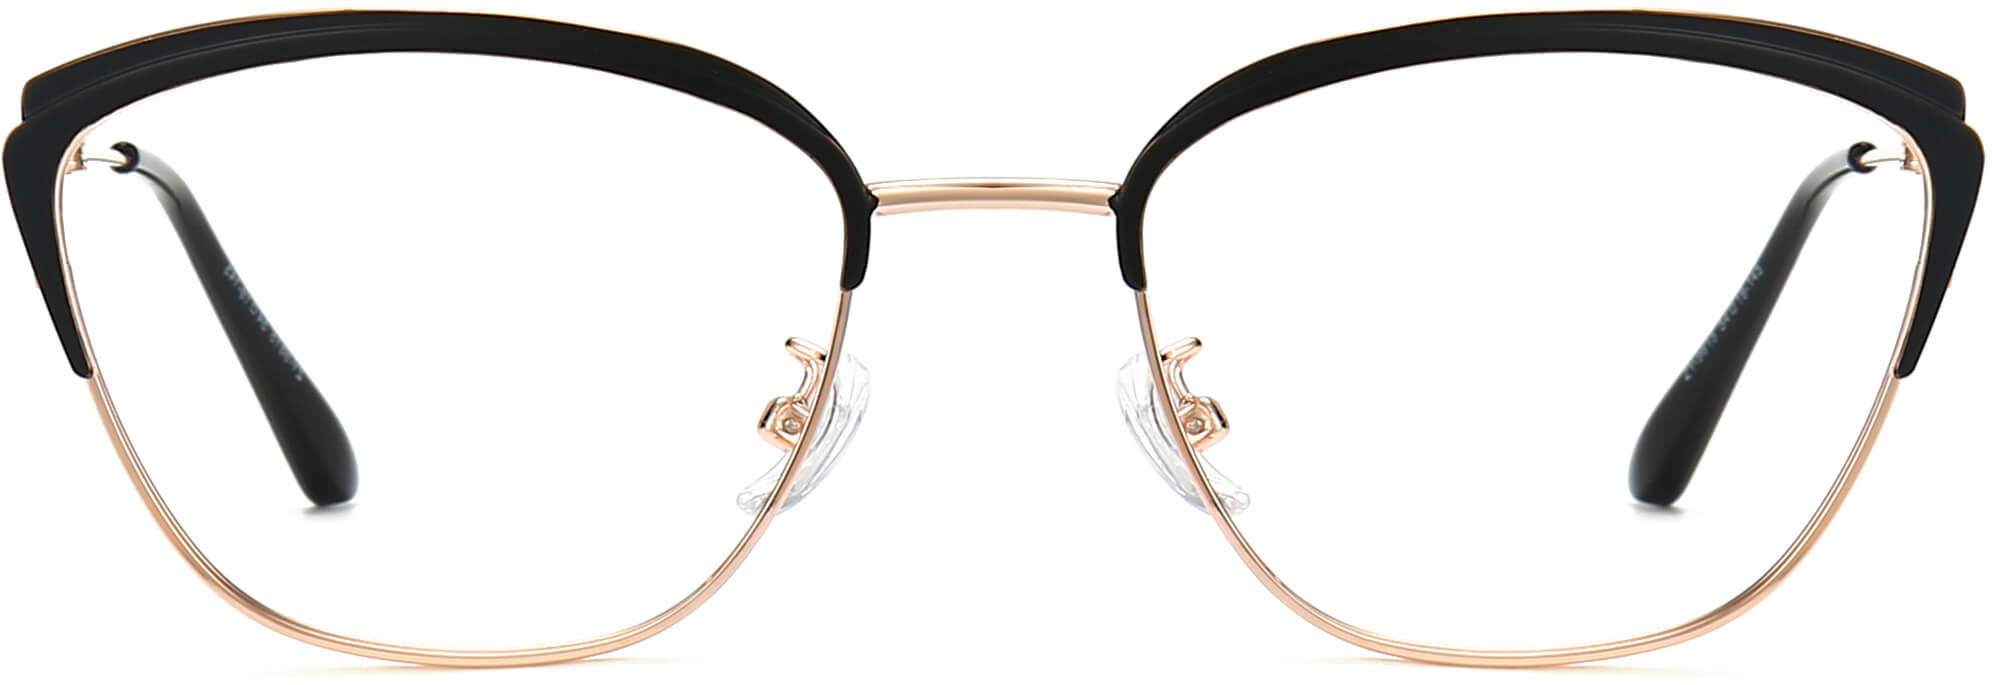 Kaliyah Cateye Black Eyeglasses from ANRRI, front view